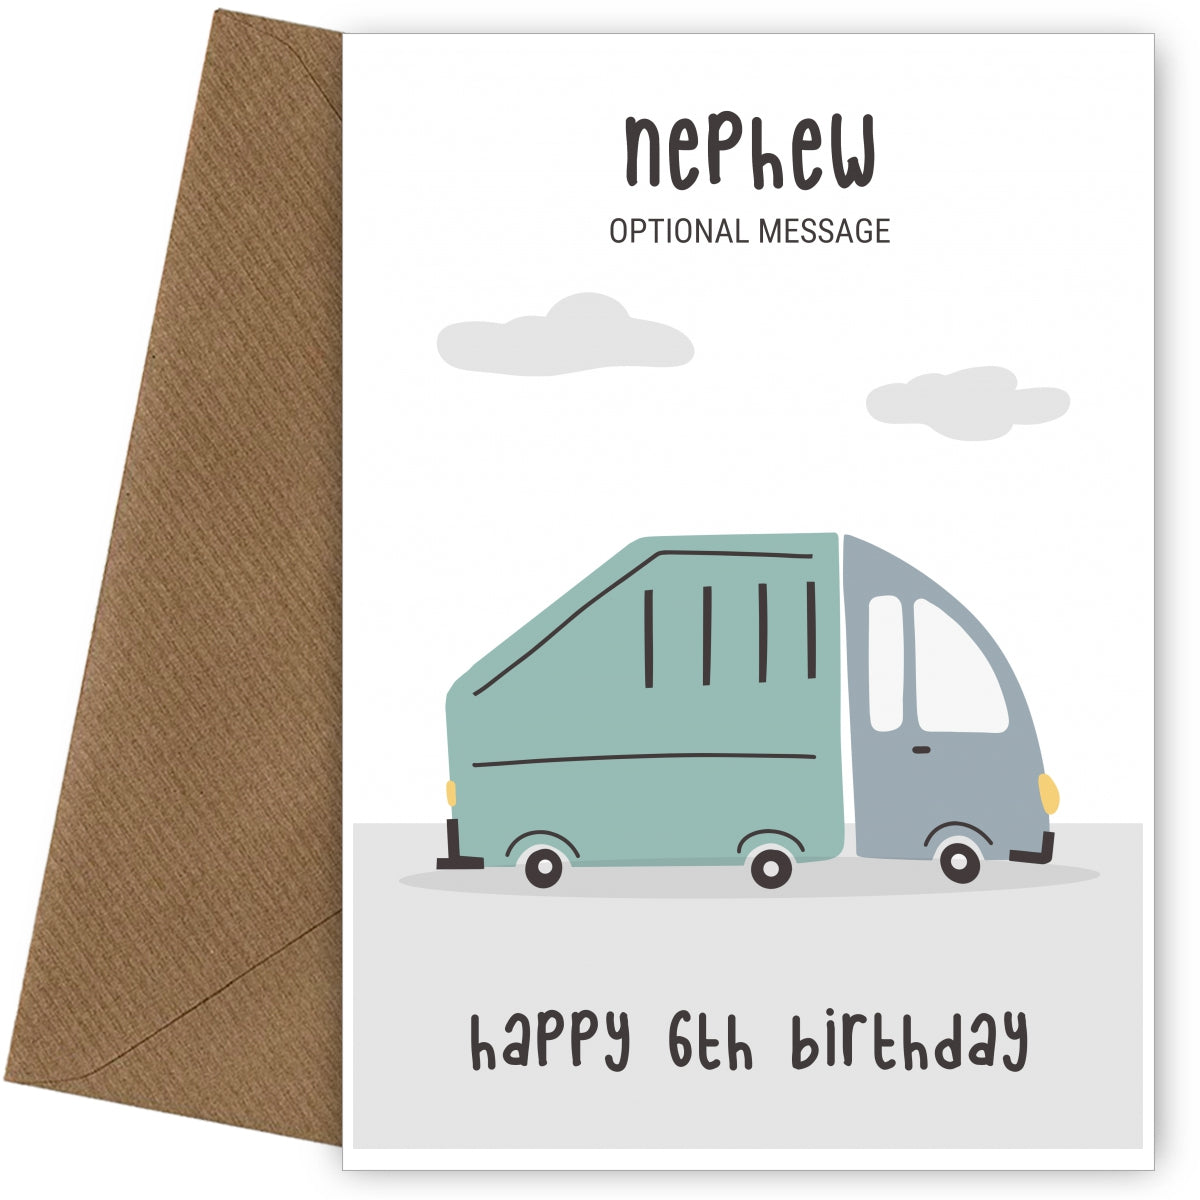 Fun Vehicles 6th Birthday Card for Nephew - Garbage Truck